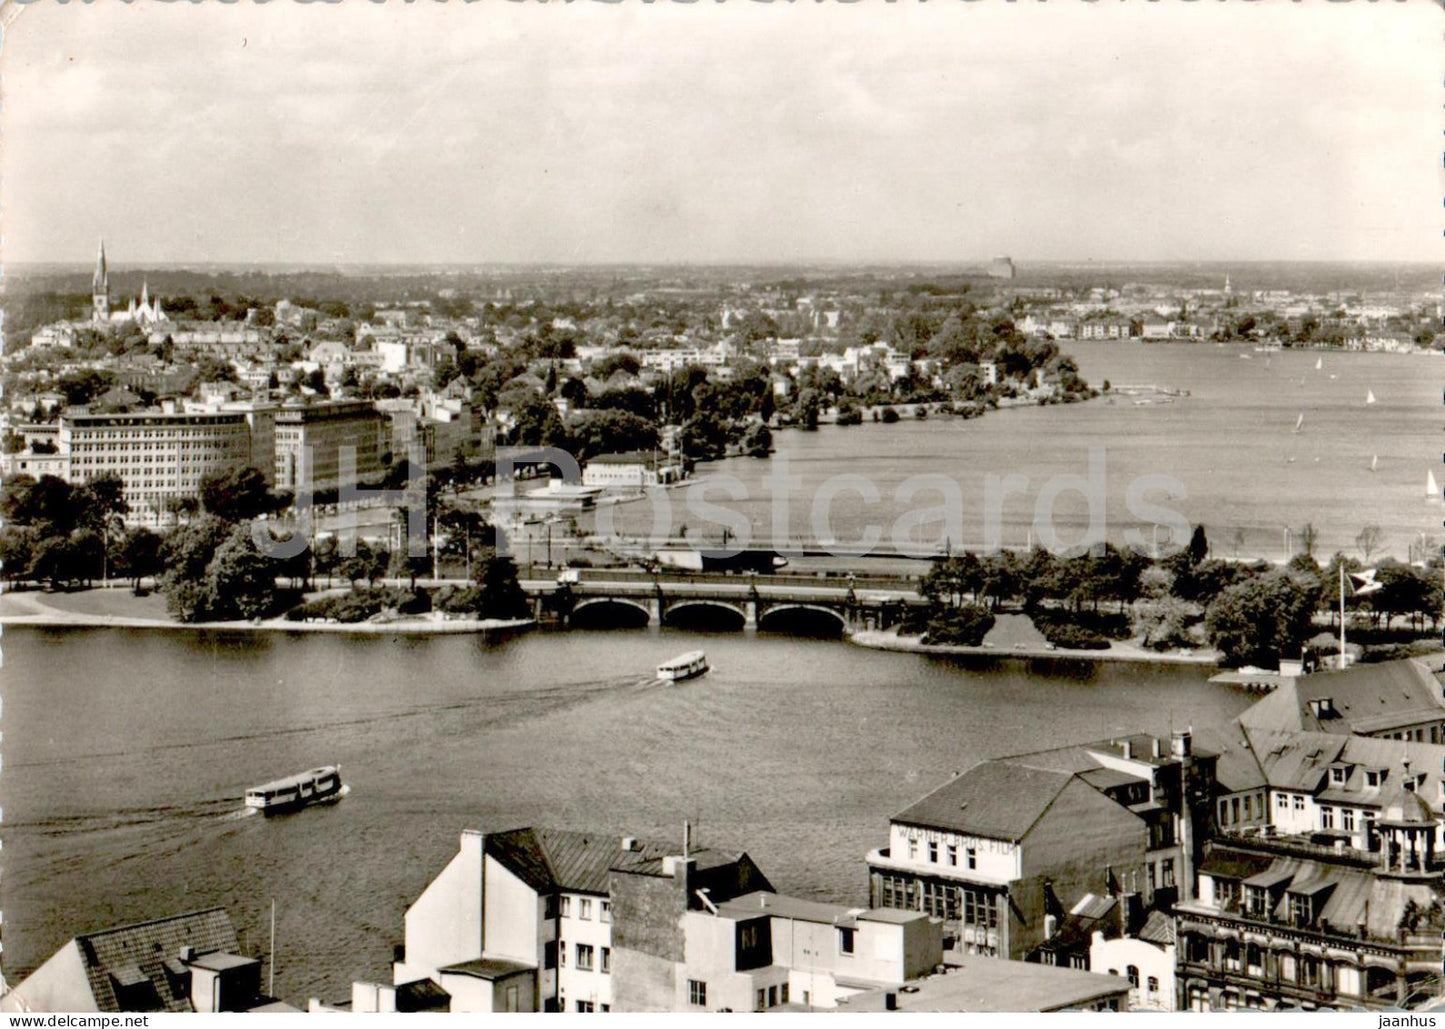 Hamburg - Lombardsbrucken und Aussenalster - bridge - 2227 - Germany - unused - JH Postcards